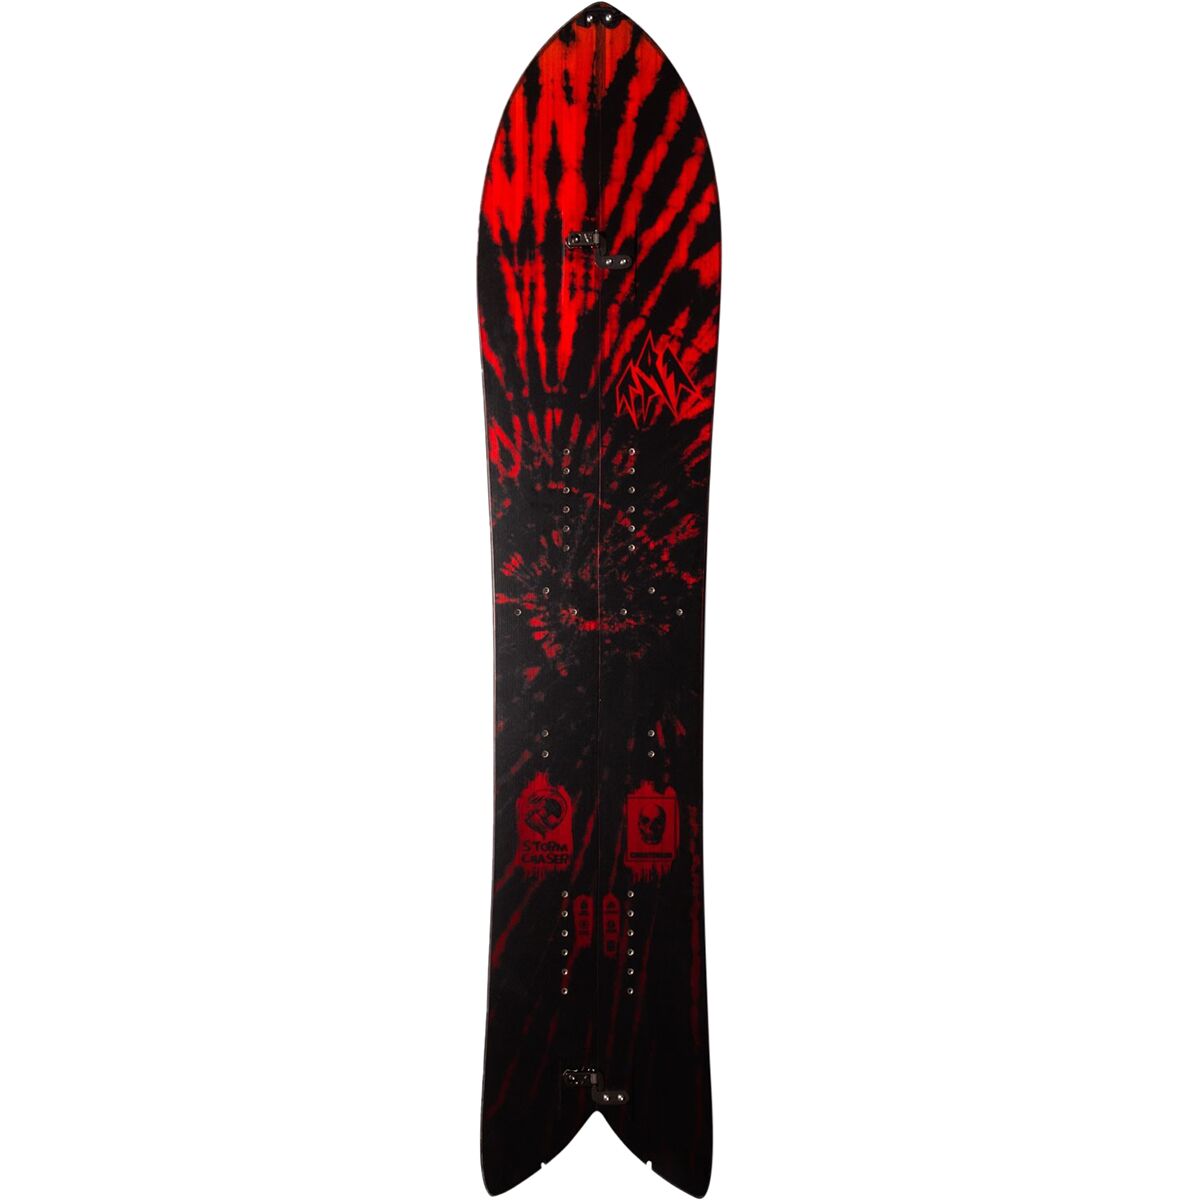 Jones Snowboards Storm Chaser Splitboard - 2022 - Snowboard